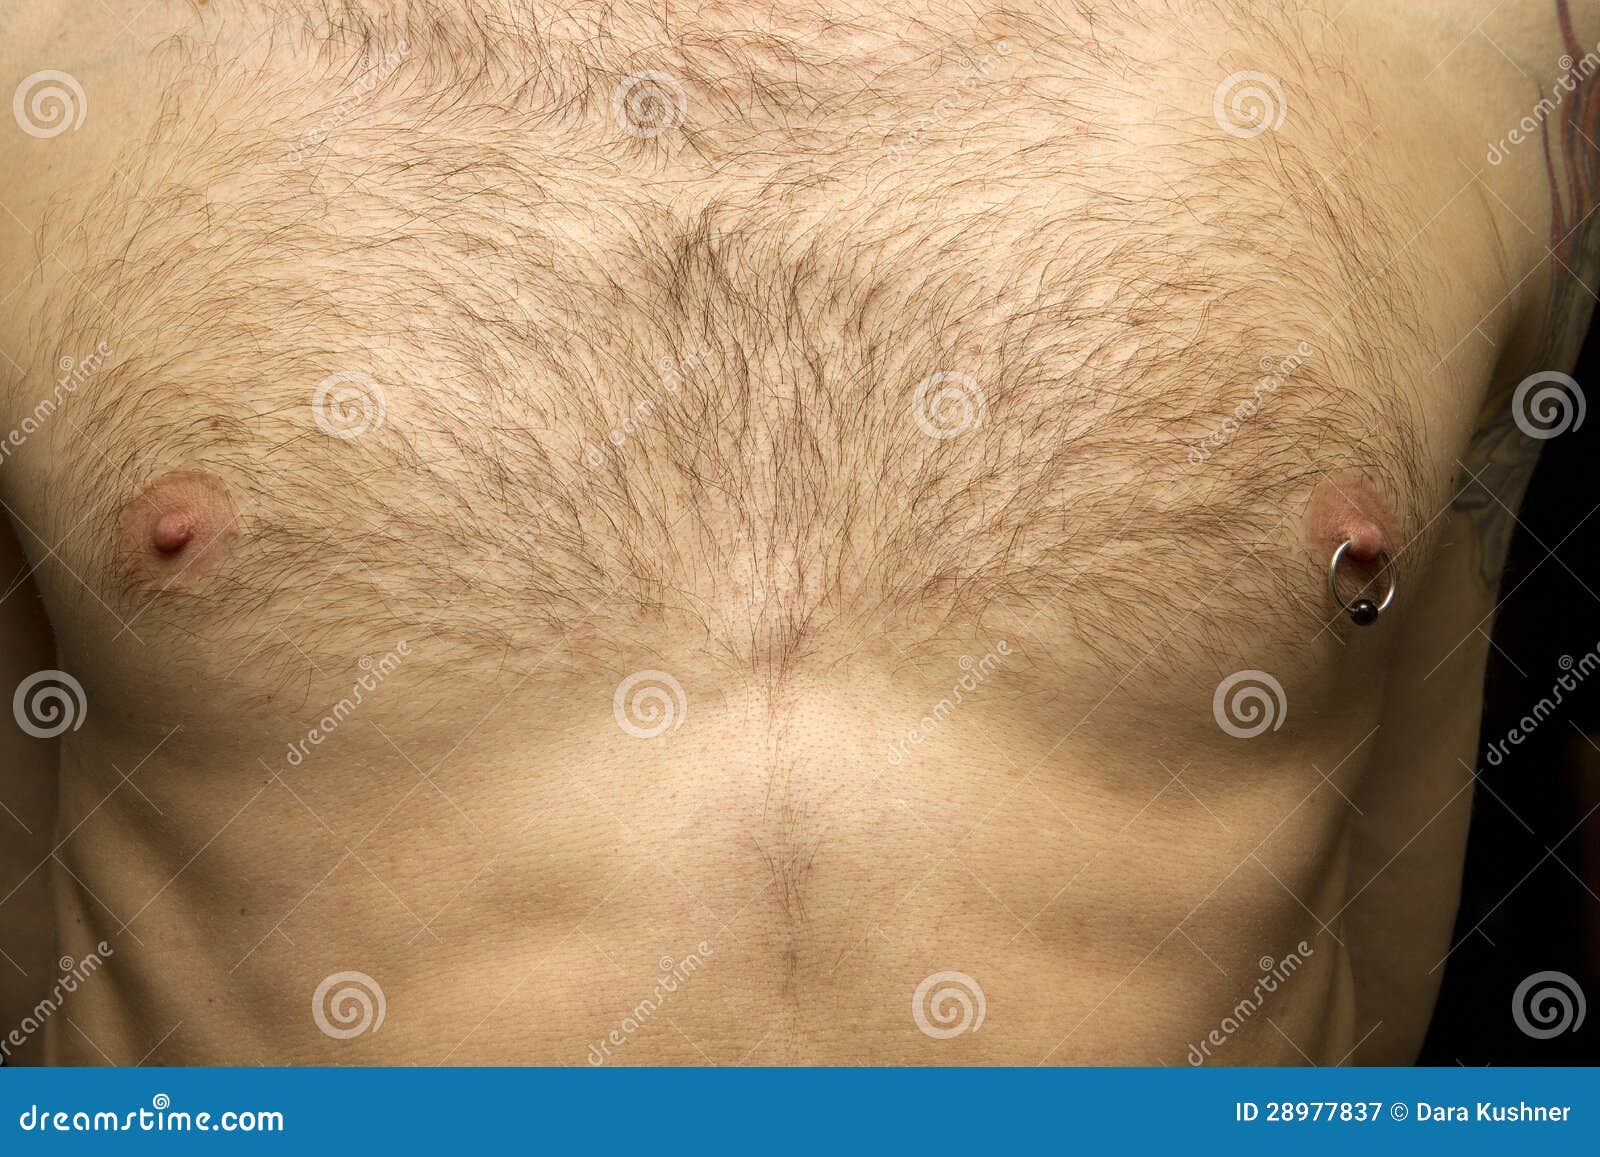 кожа у мужчин на груди фото 110